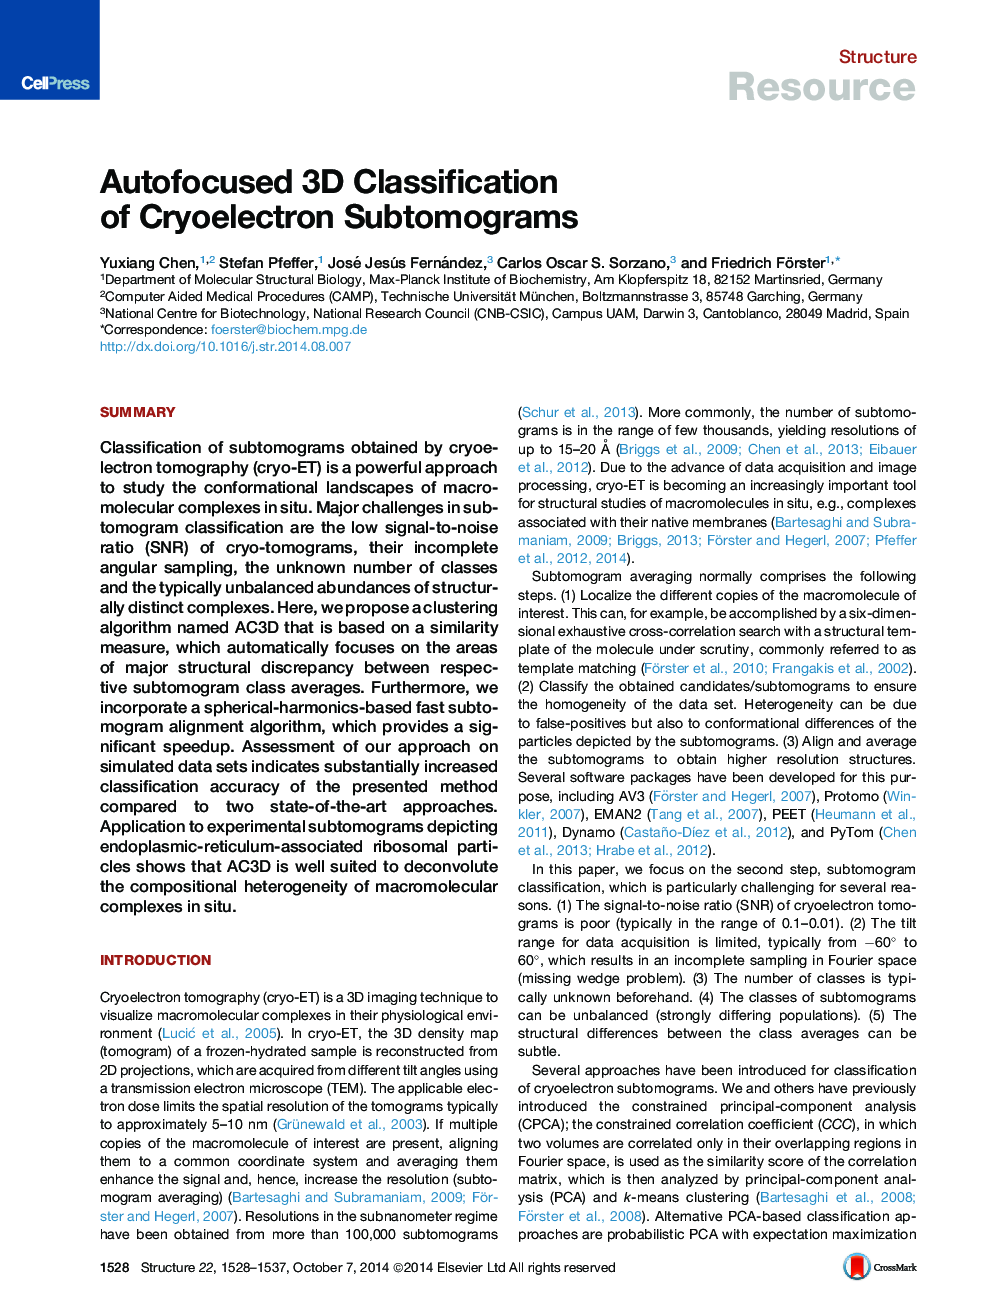 Autofocused 3D Classification of Cryoelectron Subtomograms